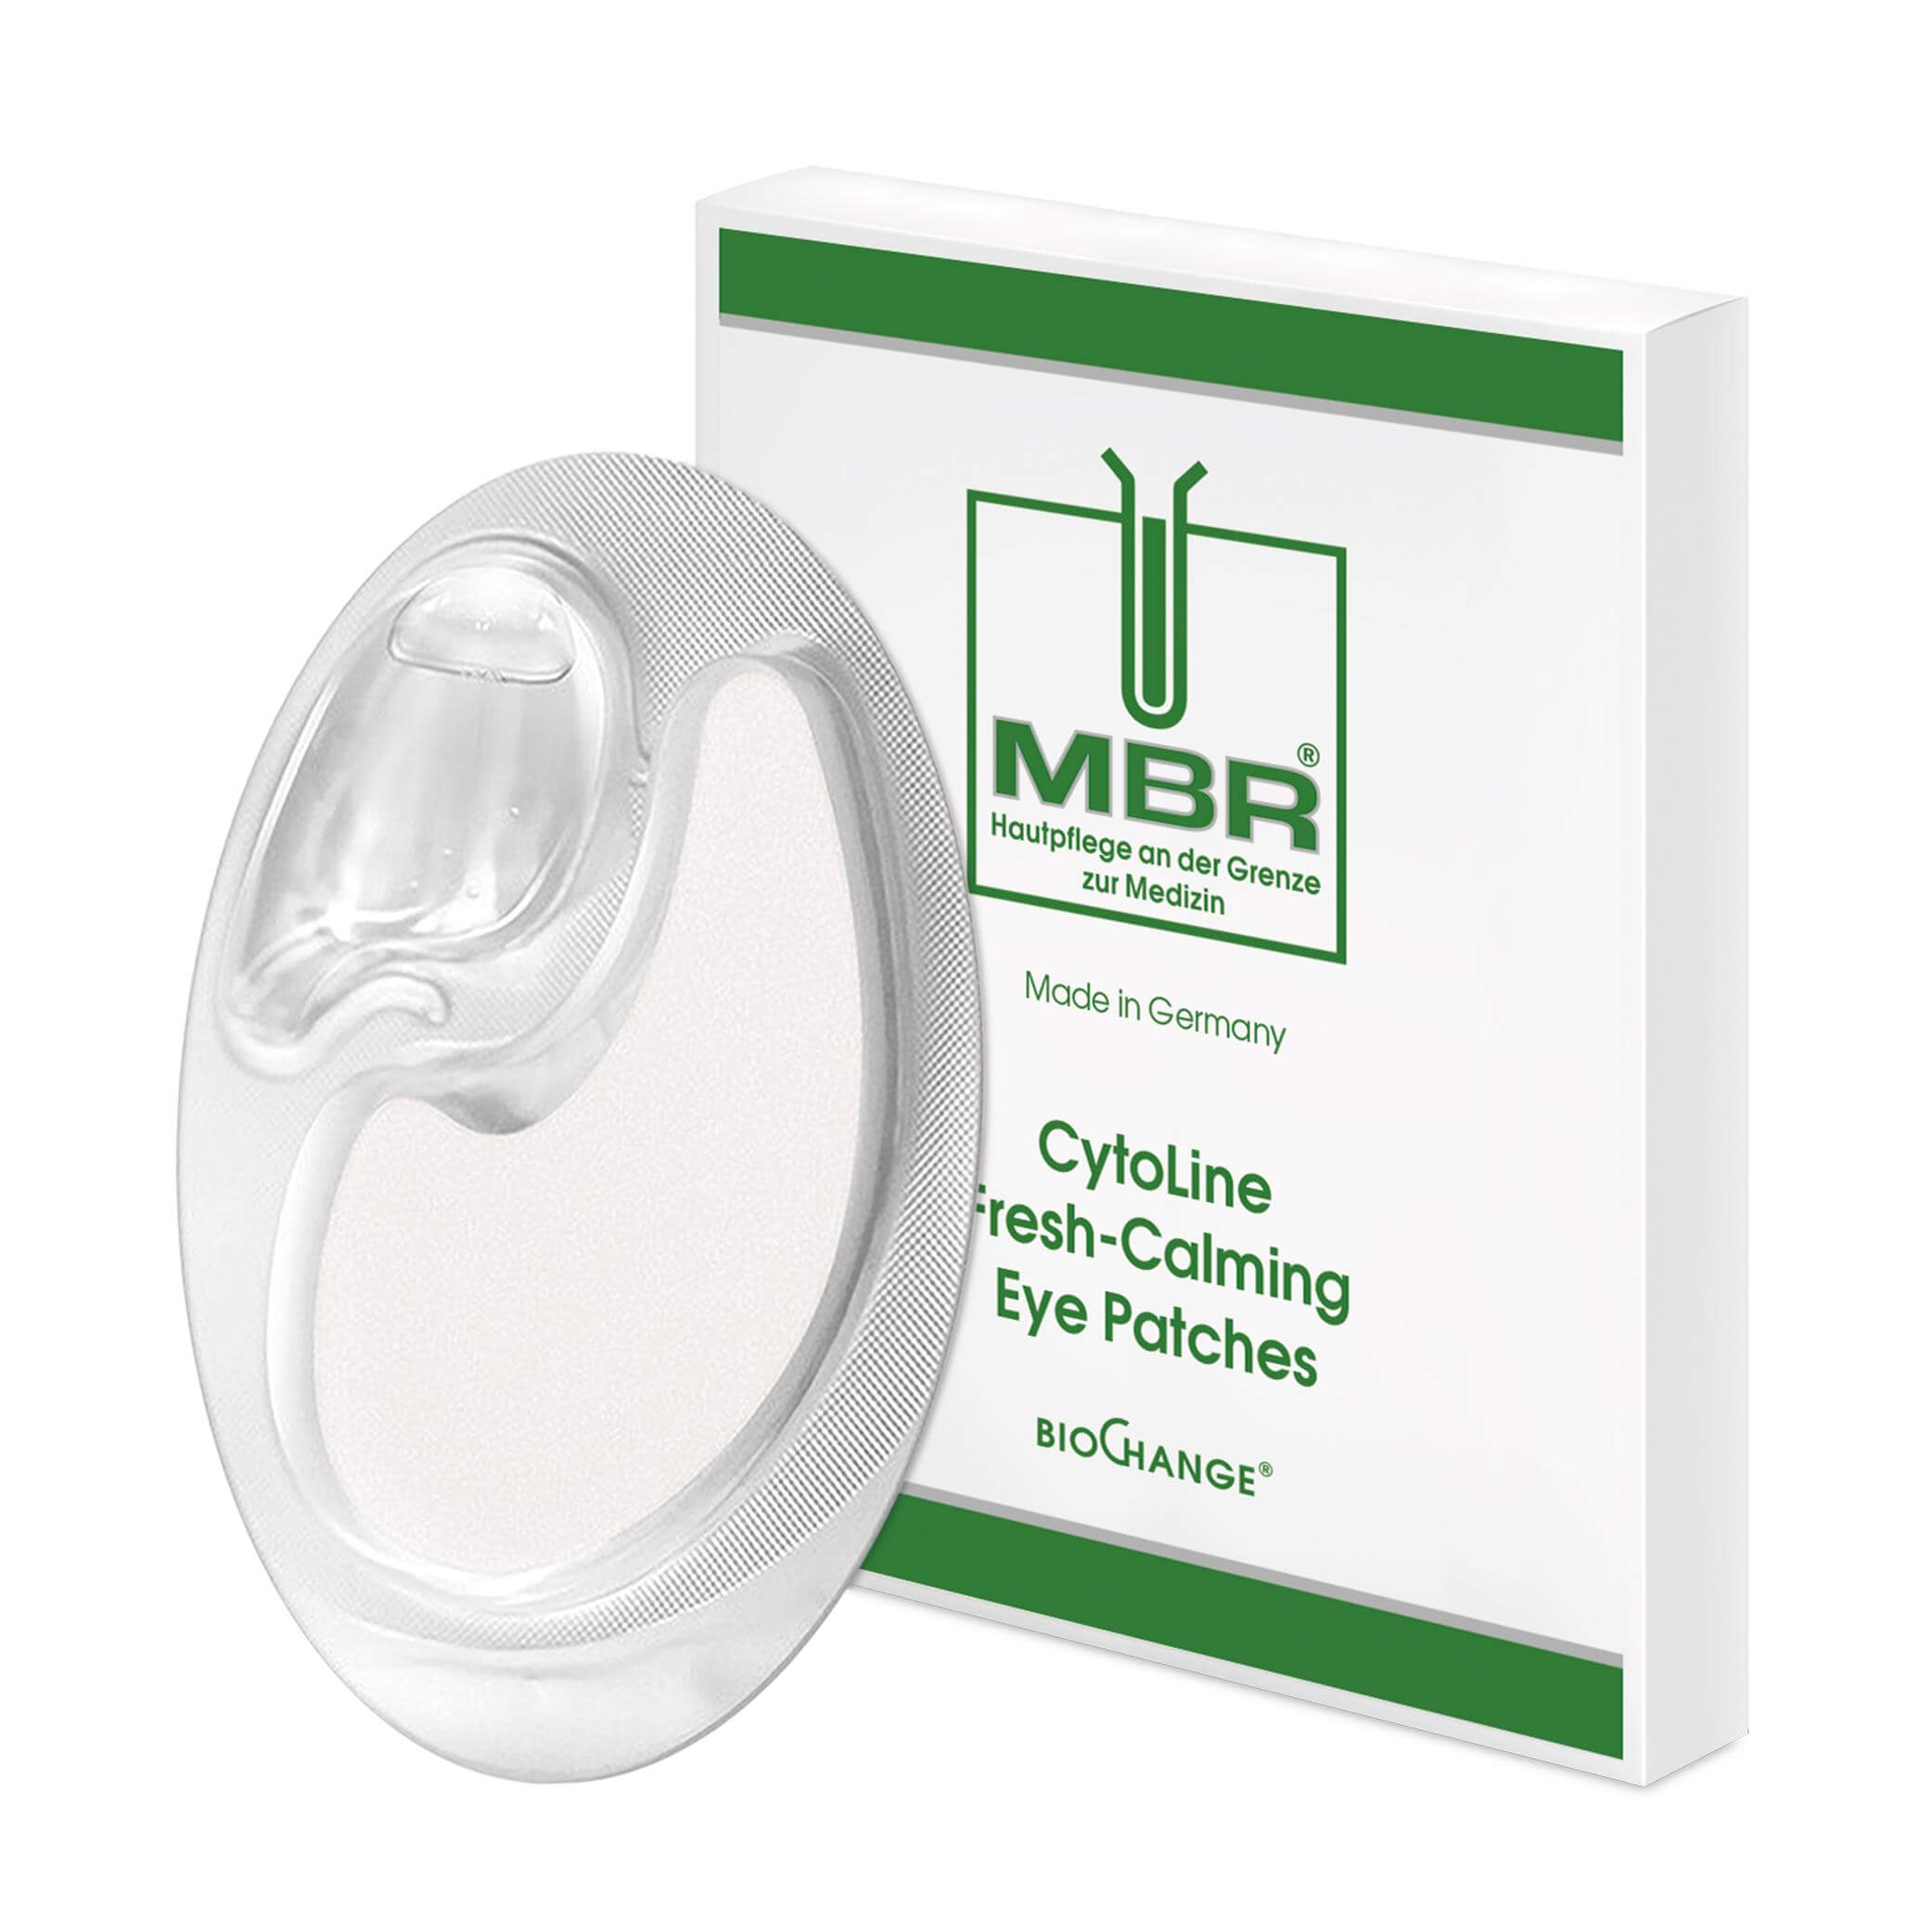 MBR BioChange CytoLine Fresh-Calming Eye Patches